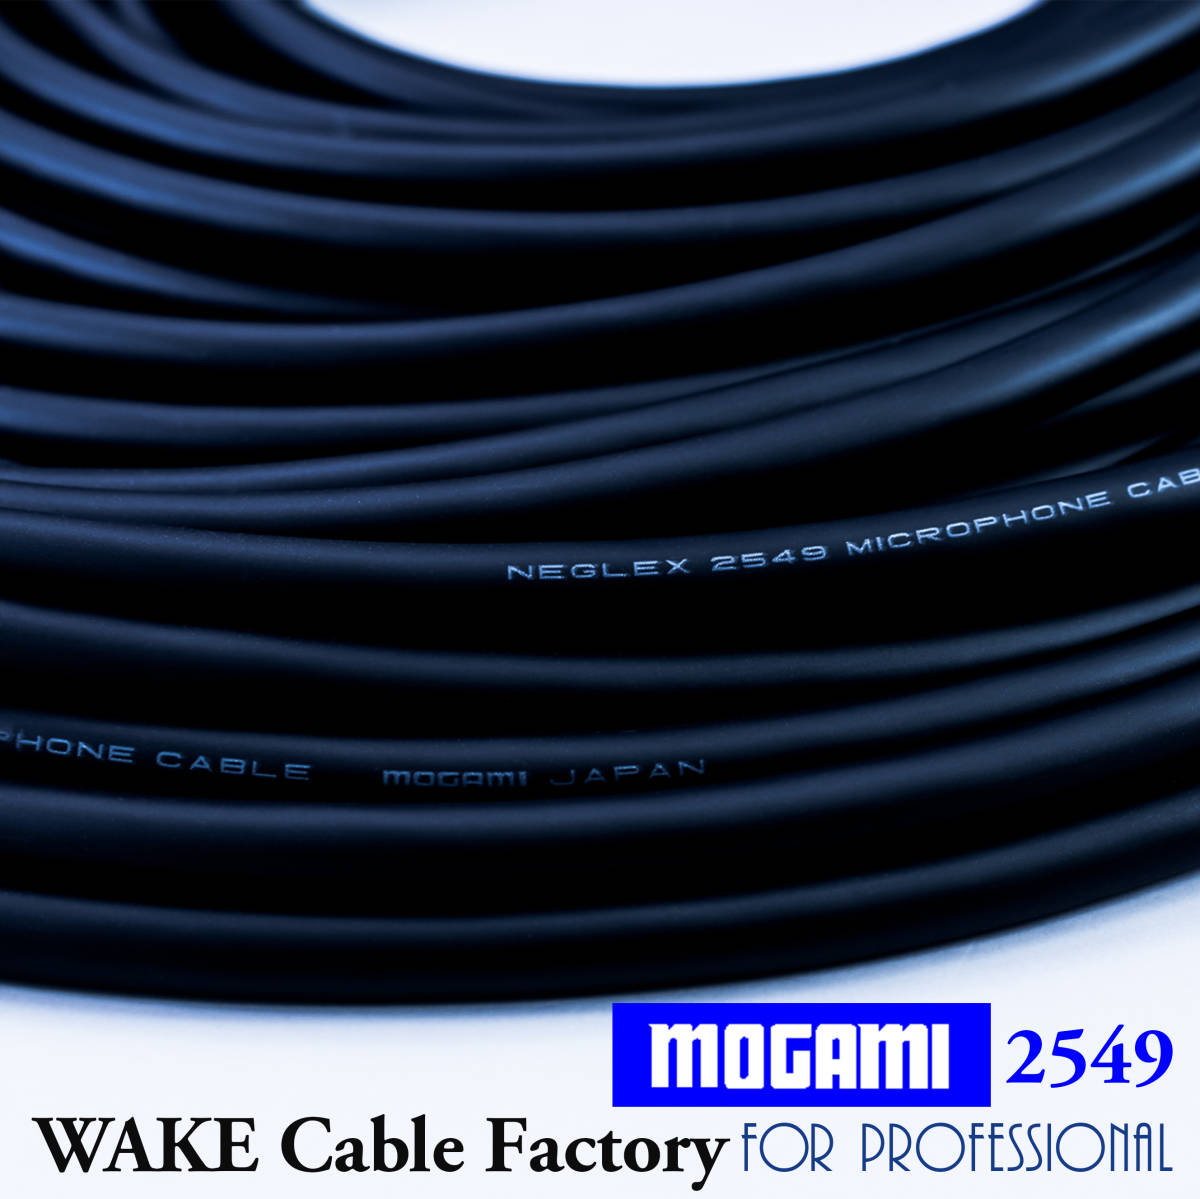  sound. balance eminent!MOGAMI2549*XLR cable 1.5m stereo pair *NEUTRIK silver plating / domestic production Moga mi/ safety standard!